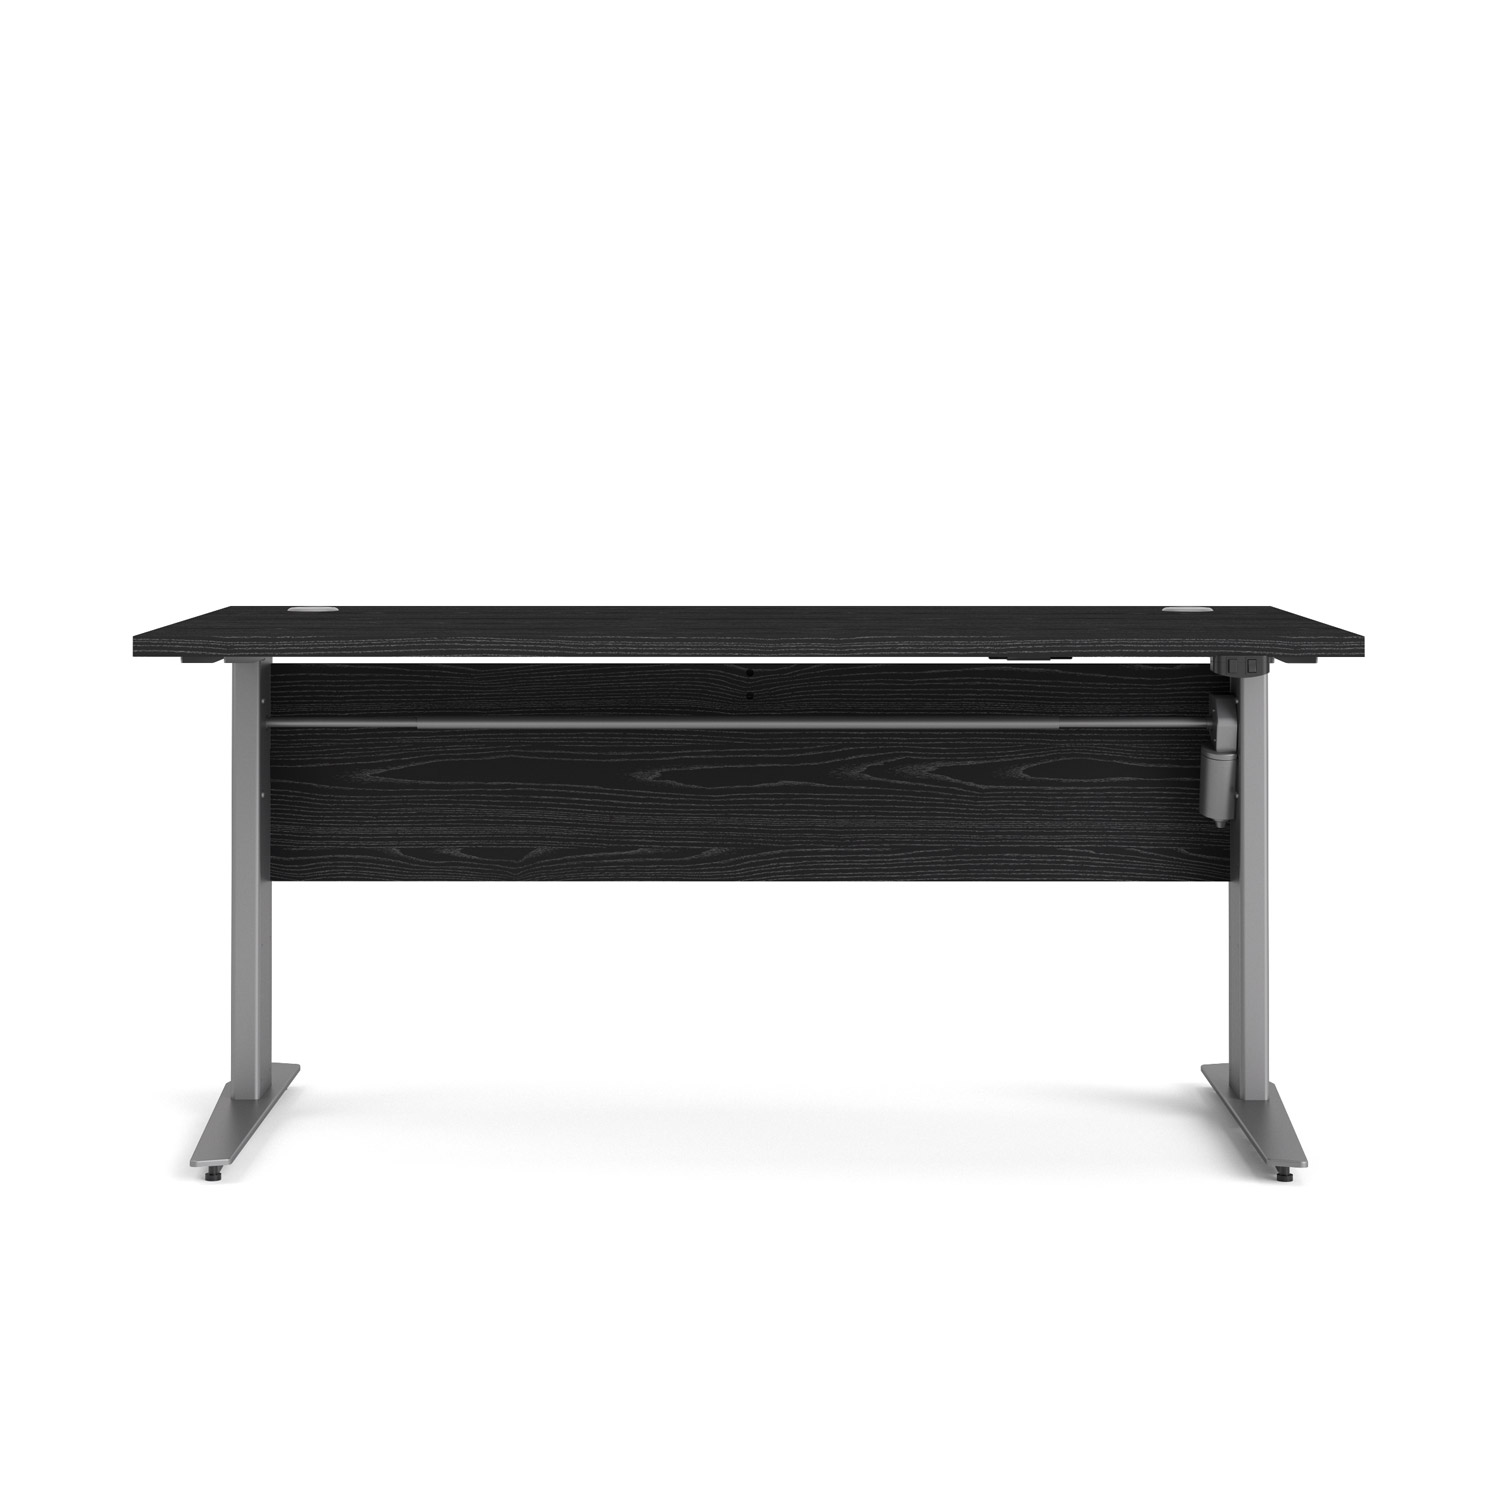 TVILUM Prima hæve sænkebord - sort/sølvgrå ask/stål, rektangulær (150x80)